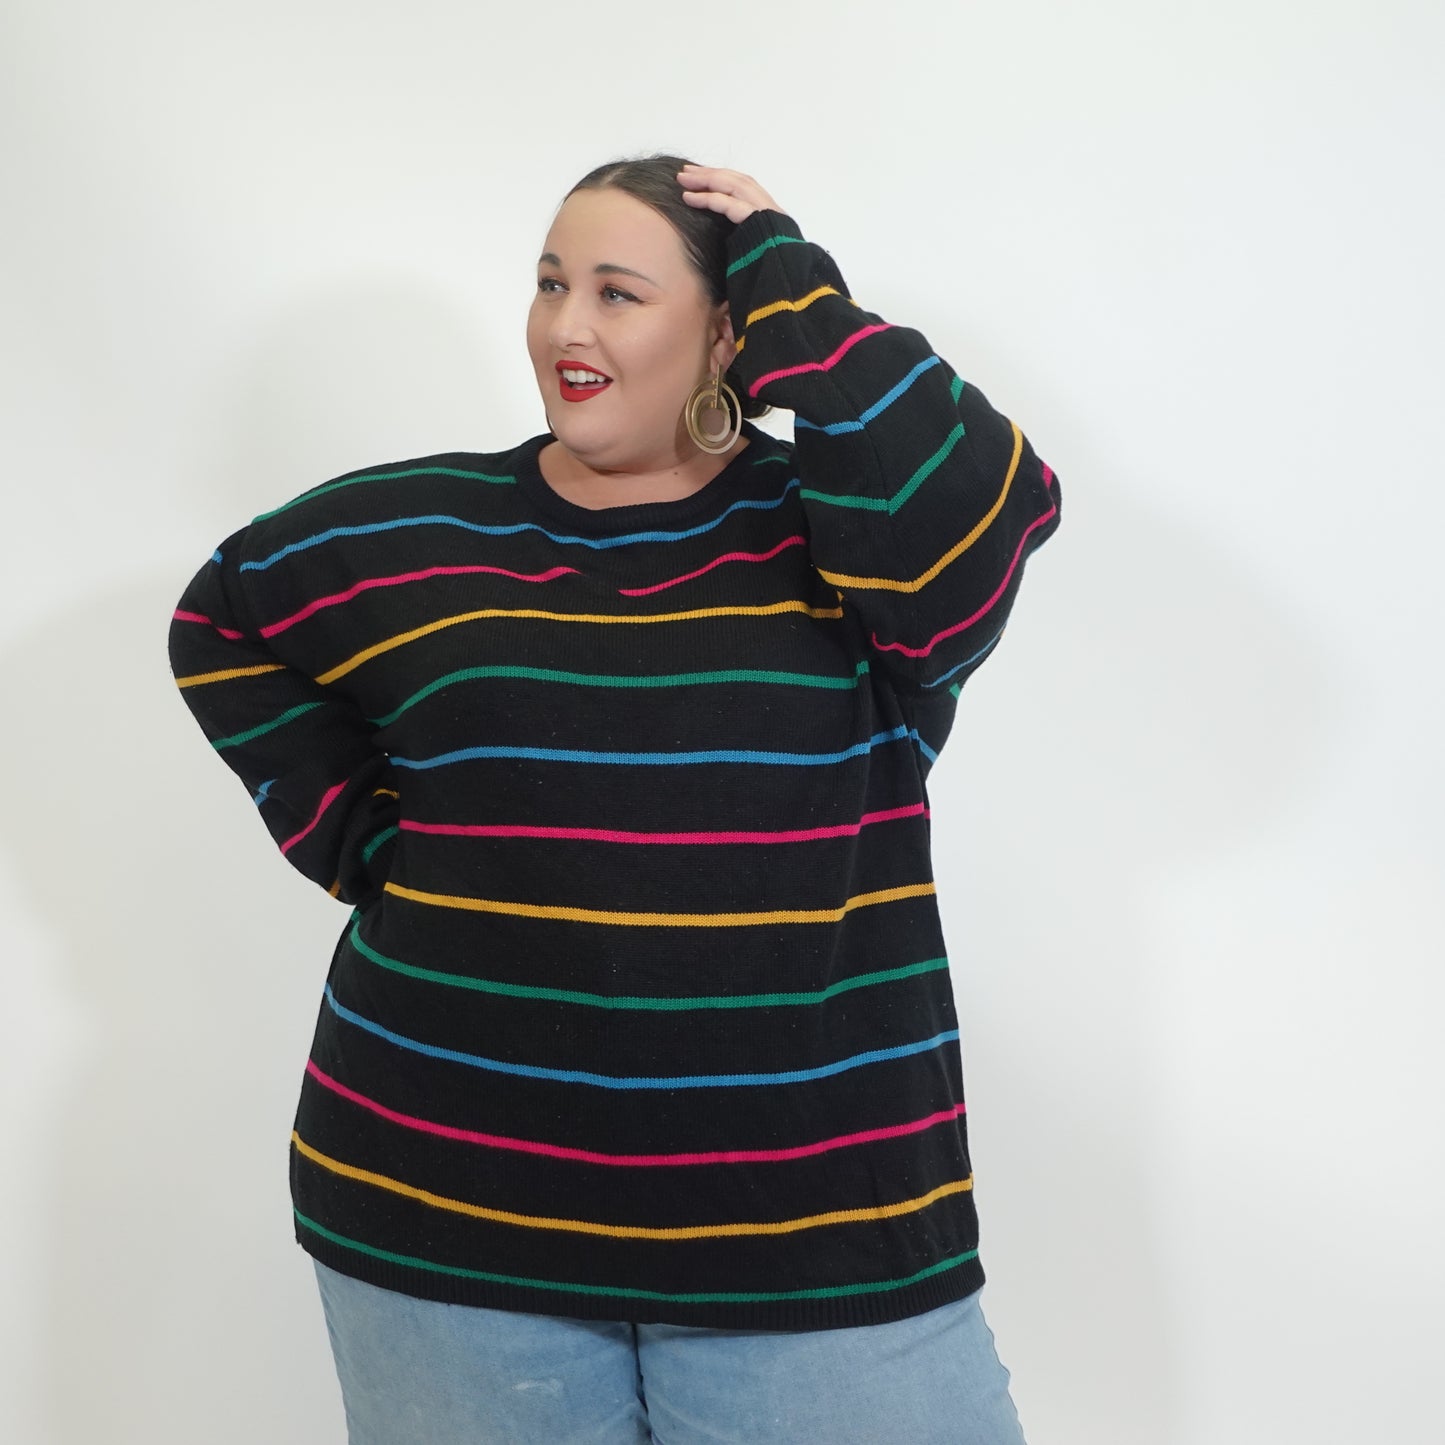 Vintage Black Sweater with Rainbow Stripes